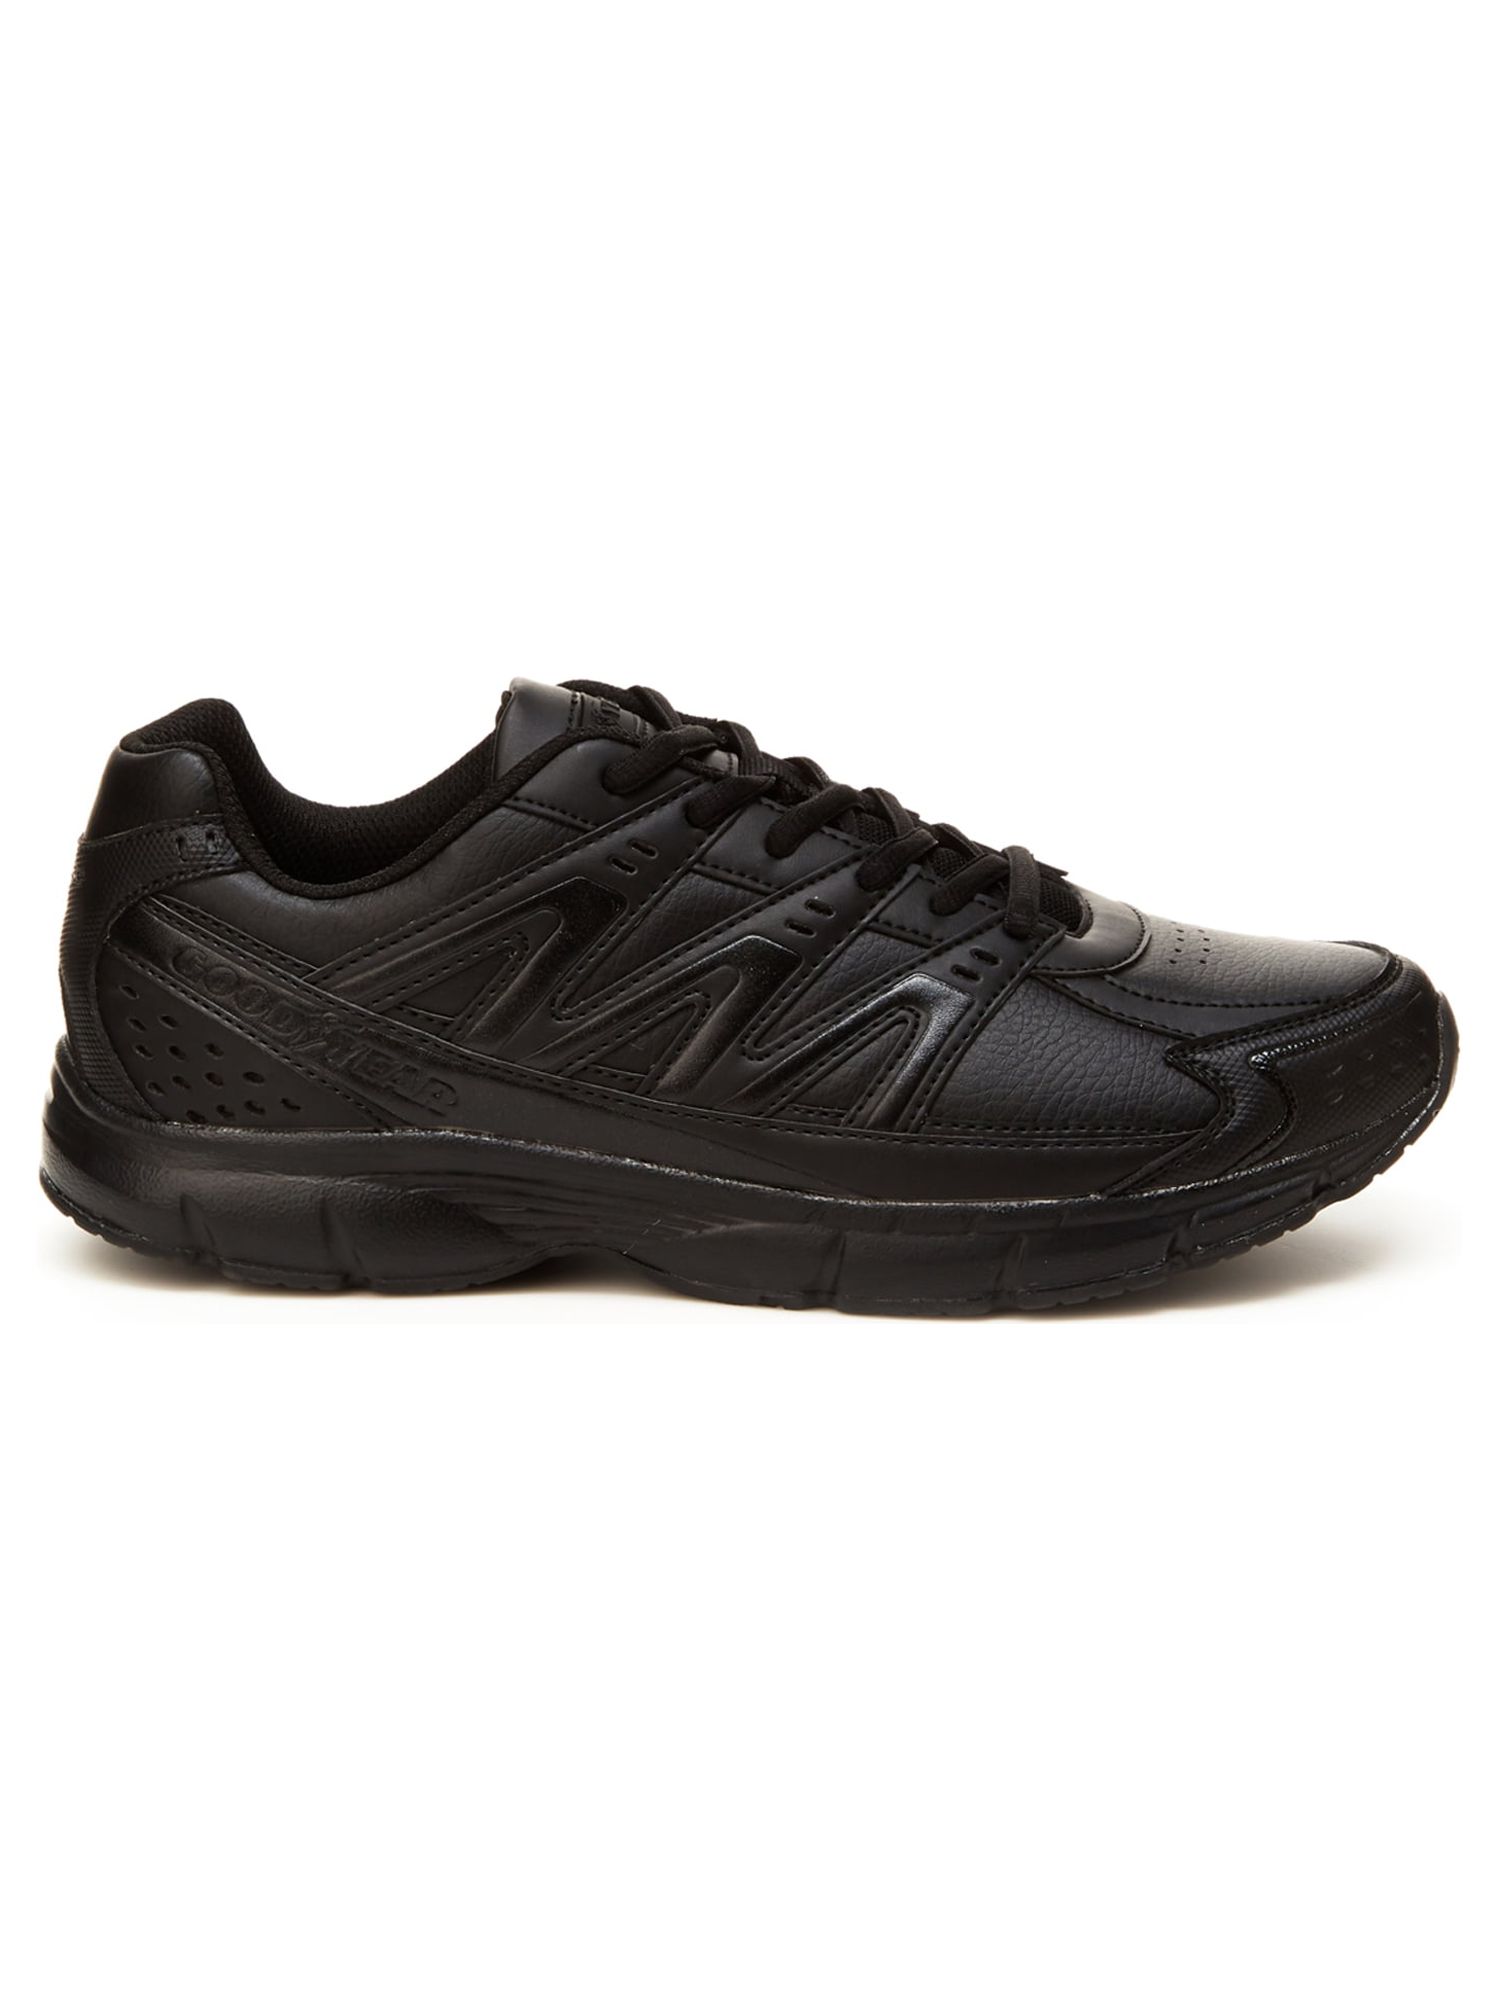 Shop Goodyear Men s Barron Slip-Resistant Work Shoes - Great Prices ...